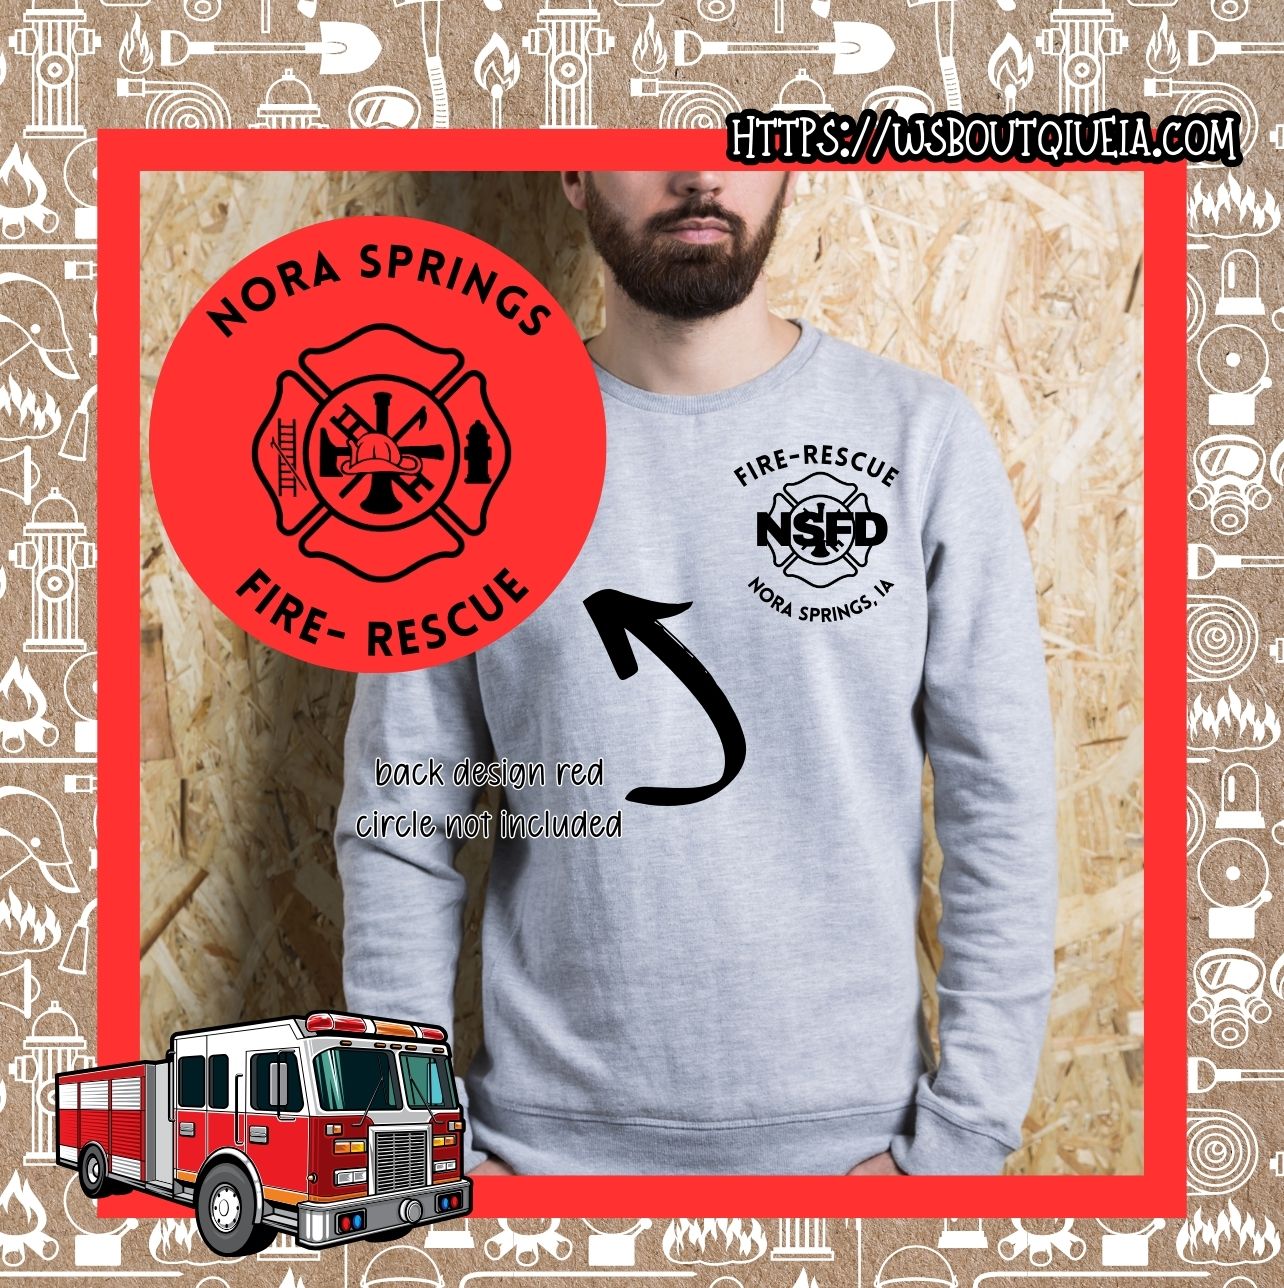 Nora Springs Fire-Rescue Graphic Tee/Sweatshirt